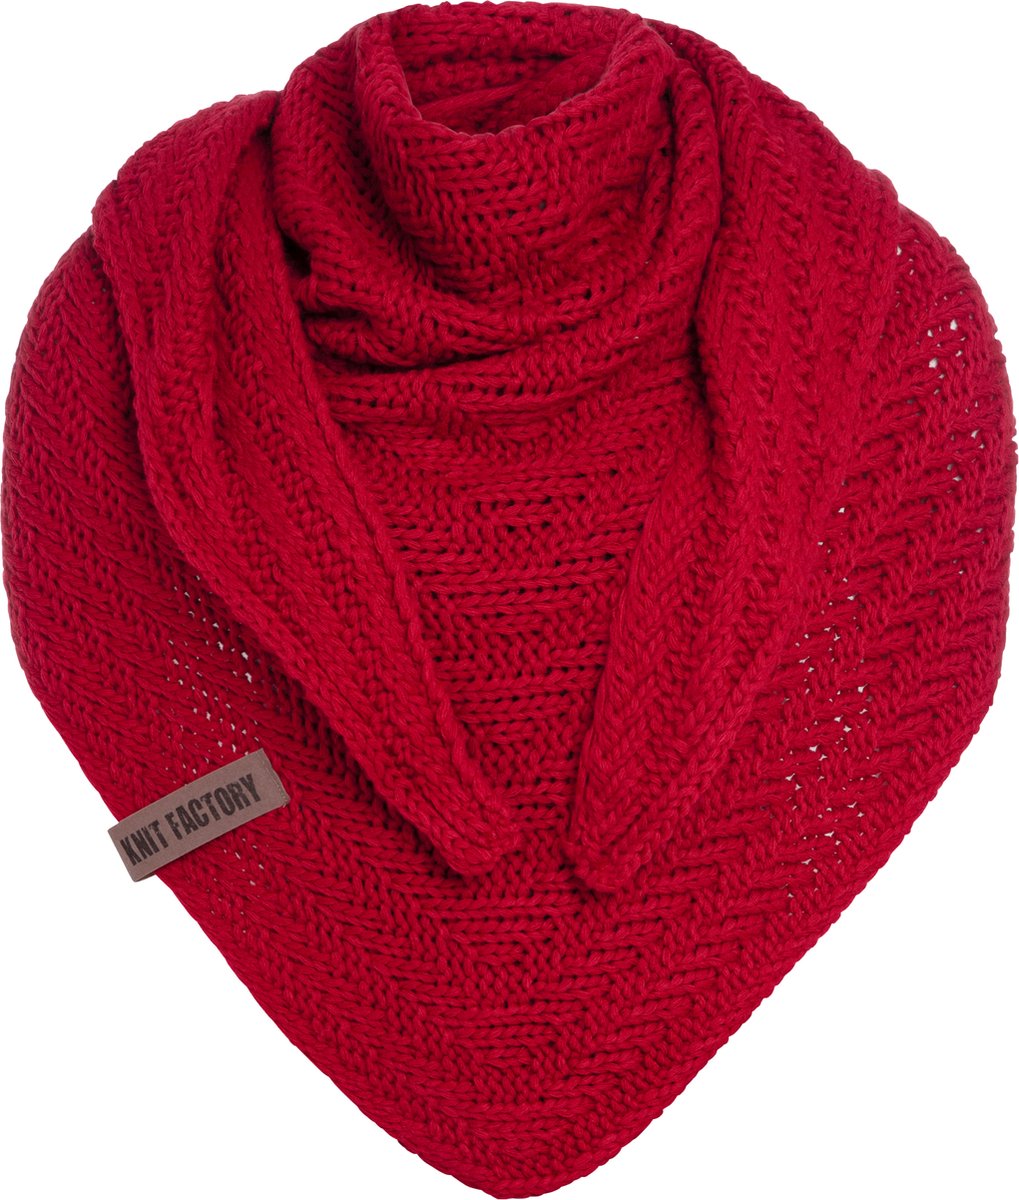 Knit Factory Sally Gebreide Omslagdoek - Driehoek Sjaal Dames - Dames sjaal - Wintersjaal - Stola - Wollen sjaal - Rood gemêleerde sjaal - Bright Red - 220x85 cm - Grof gebreid